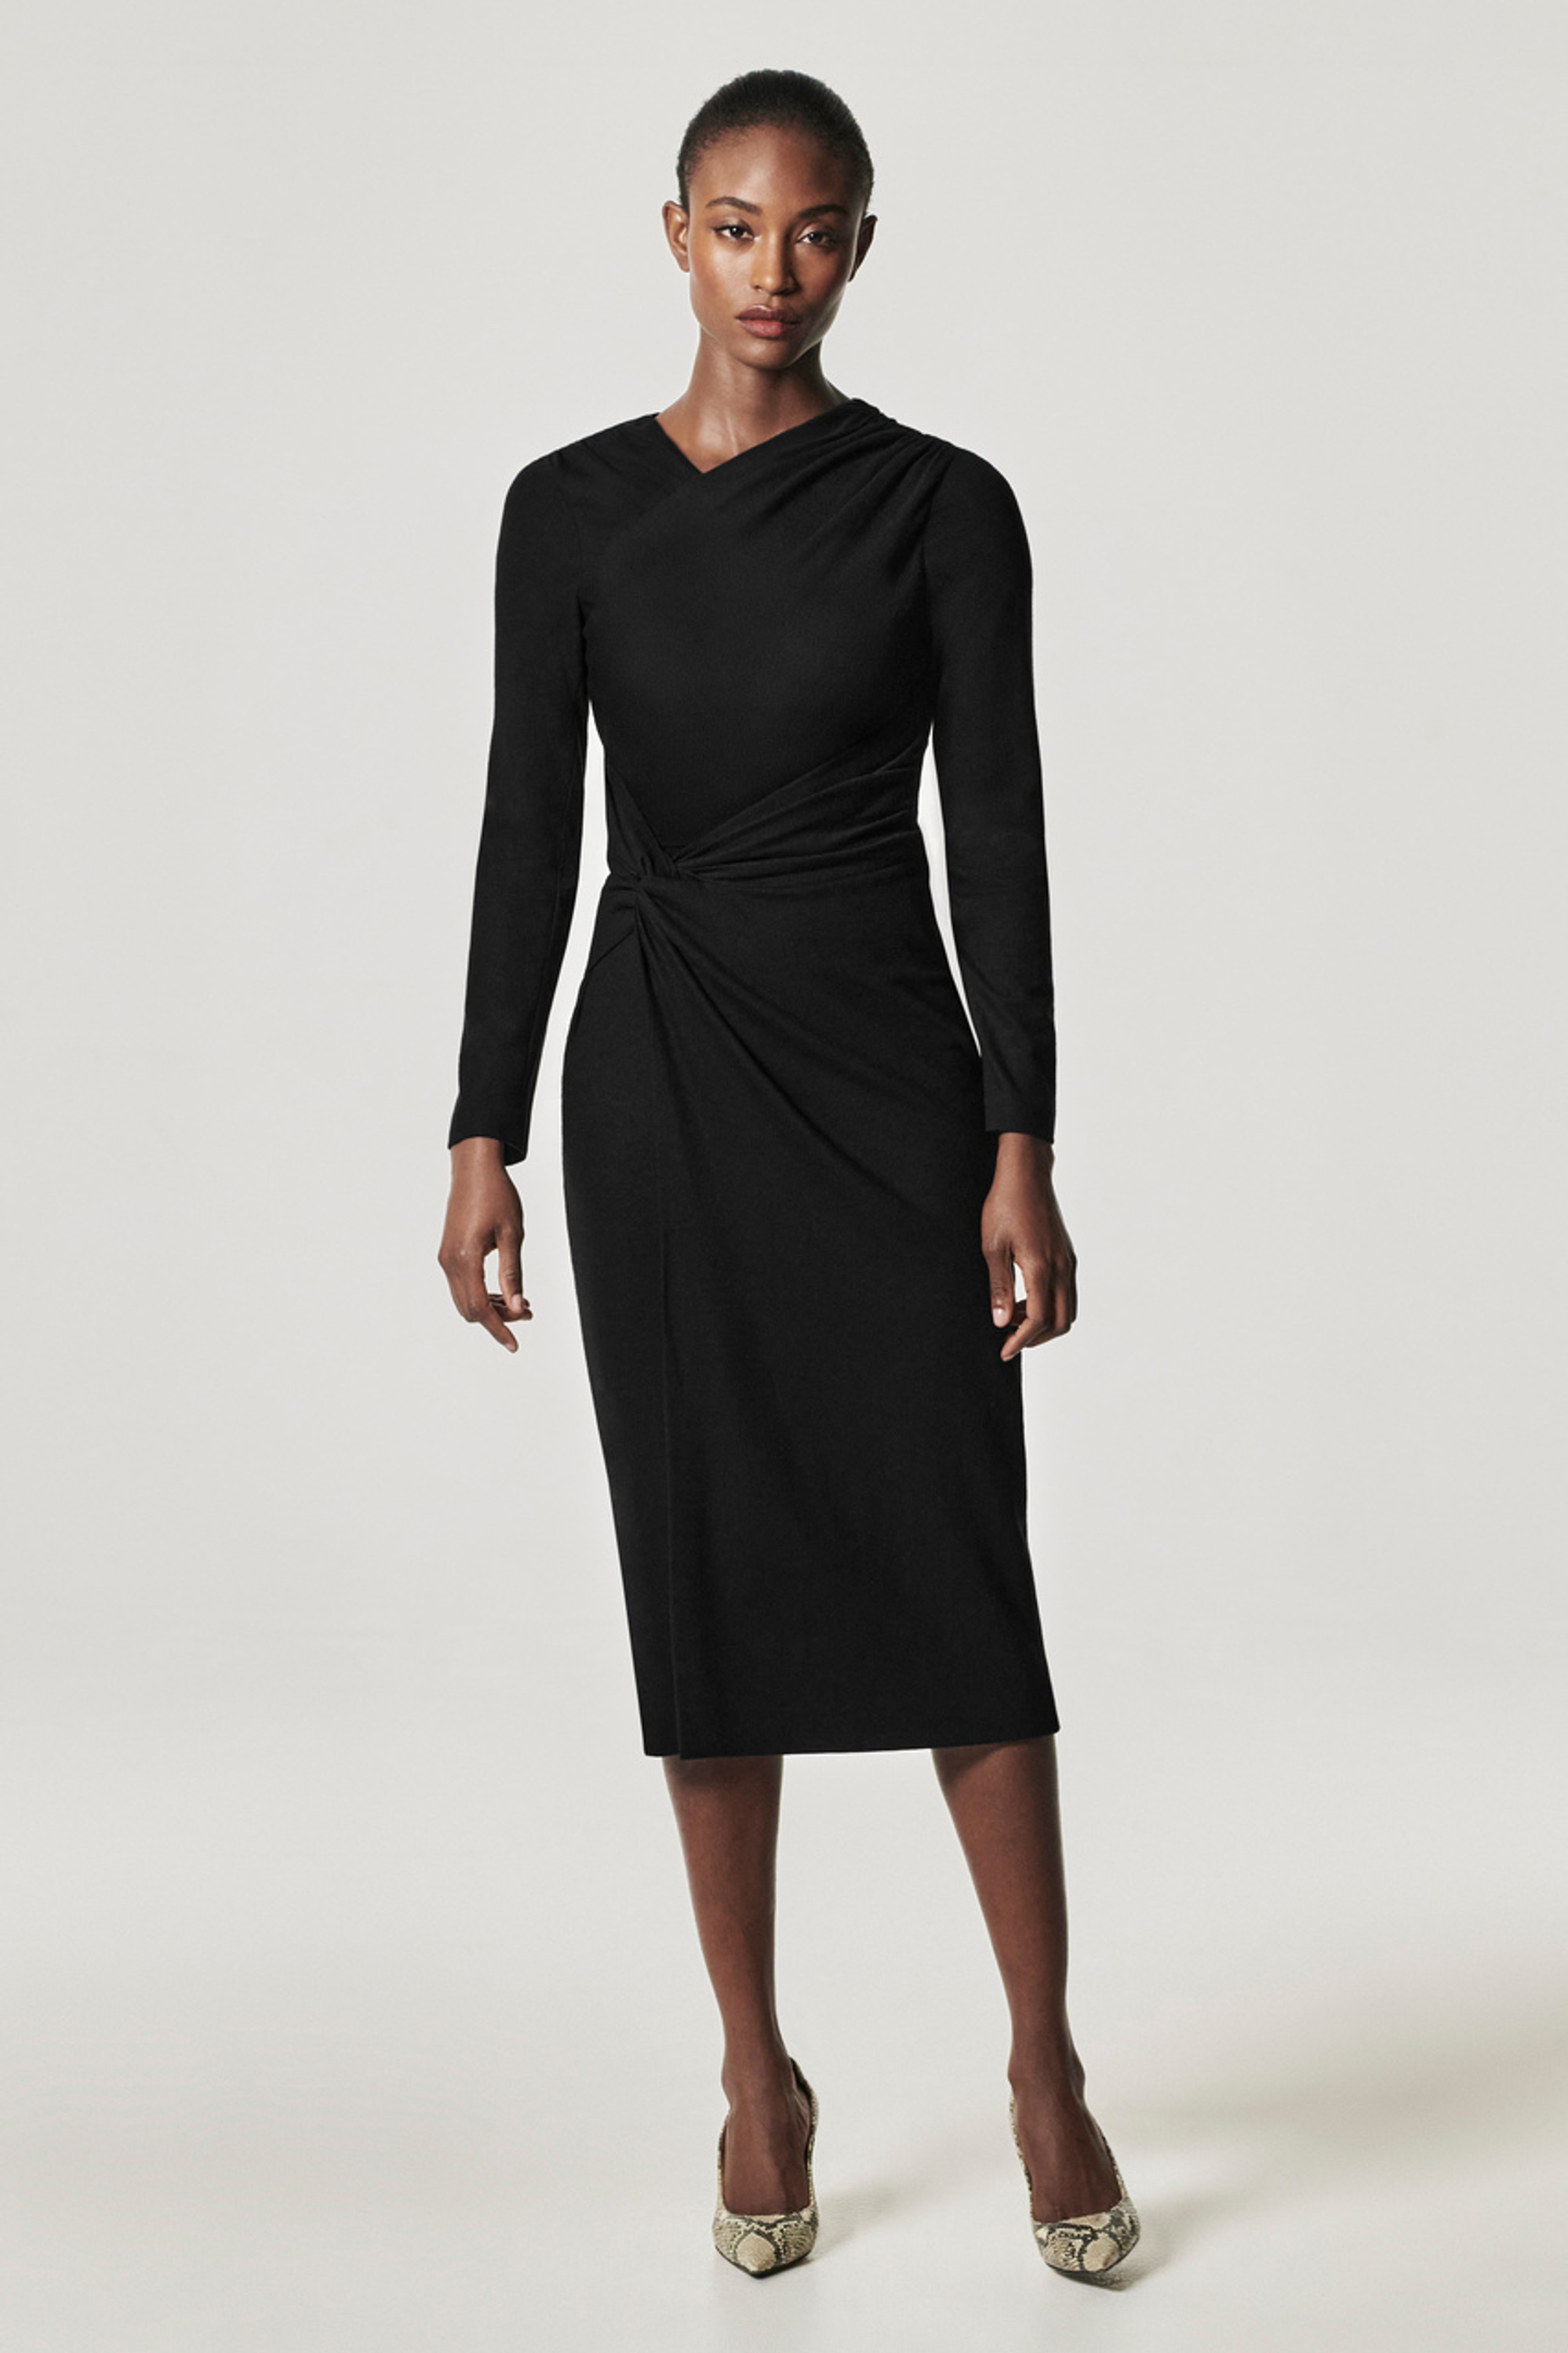 Slim-fit knitted wool and silk dress, black | Sportmax